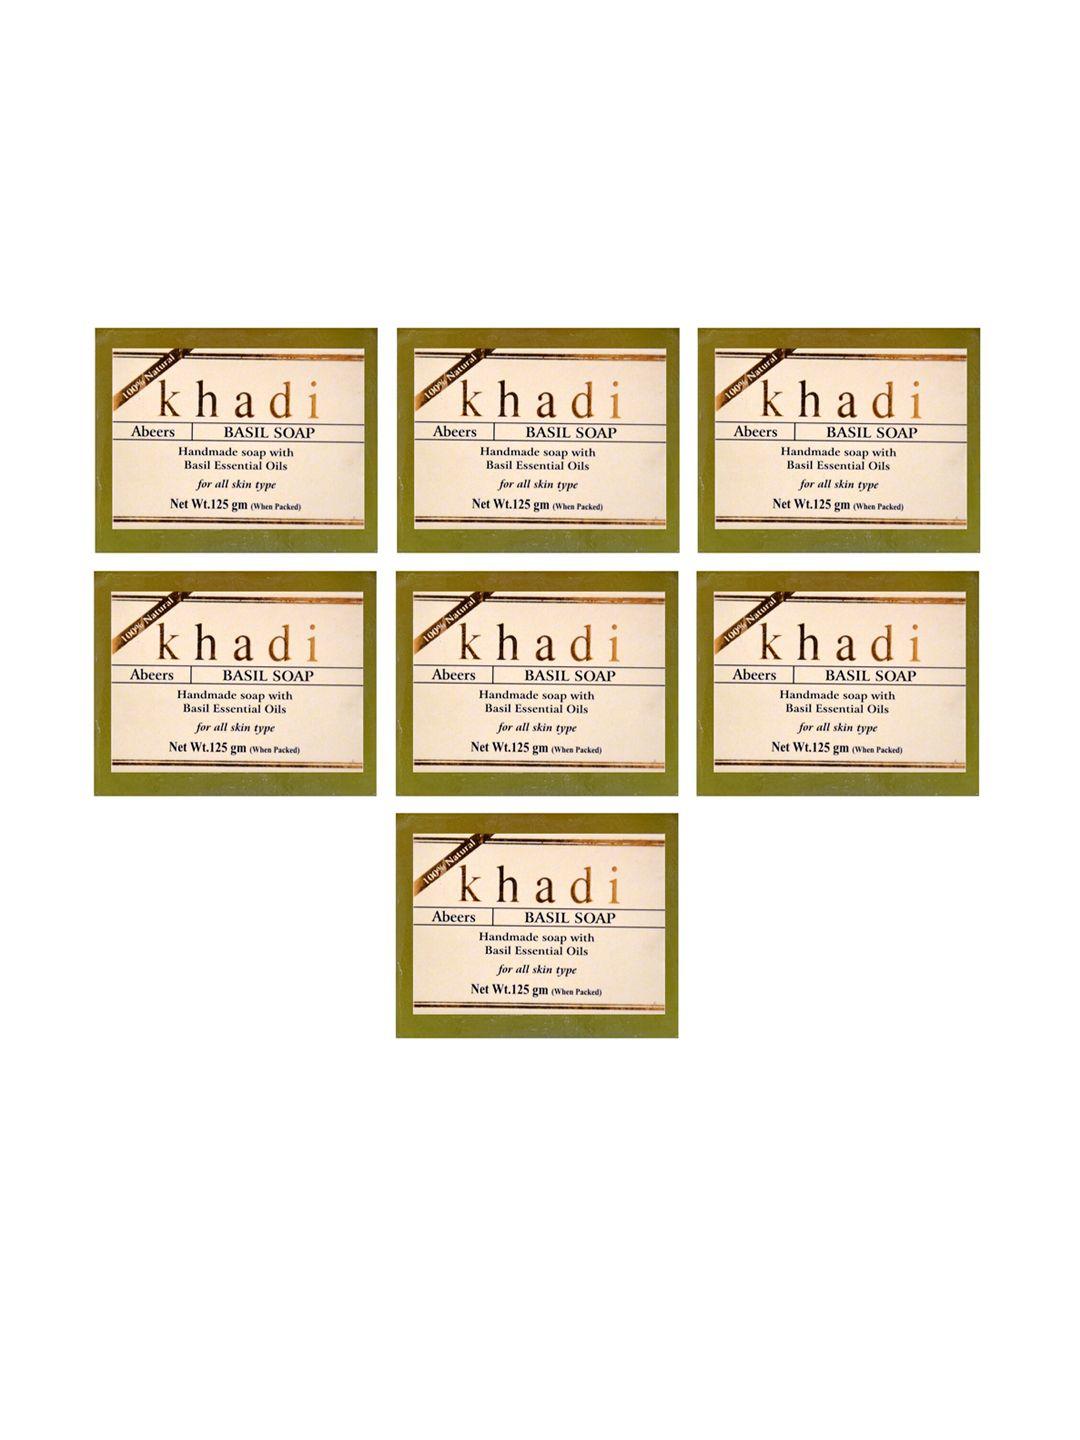 abeers khadi set of 7 handmade basil soaps with essential oils - 125 g each